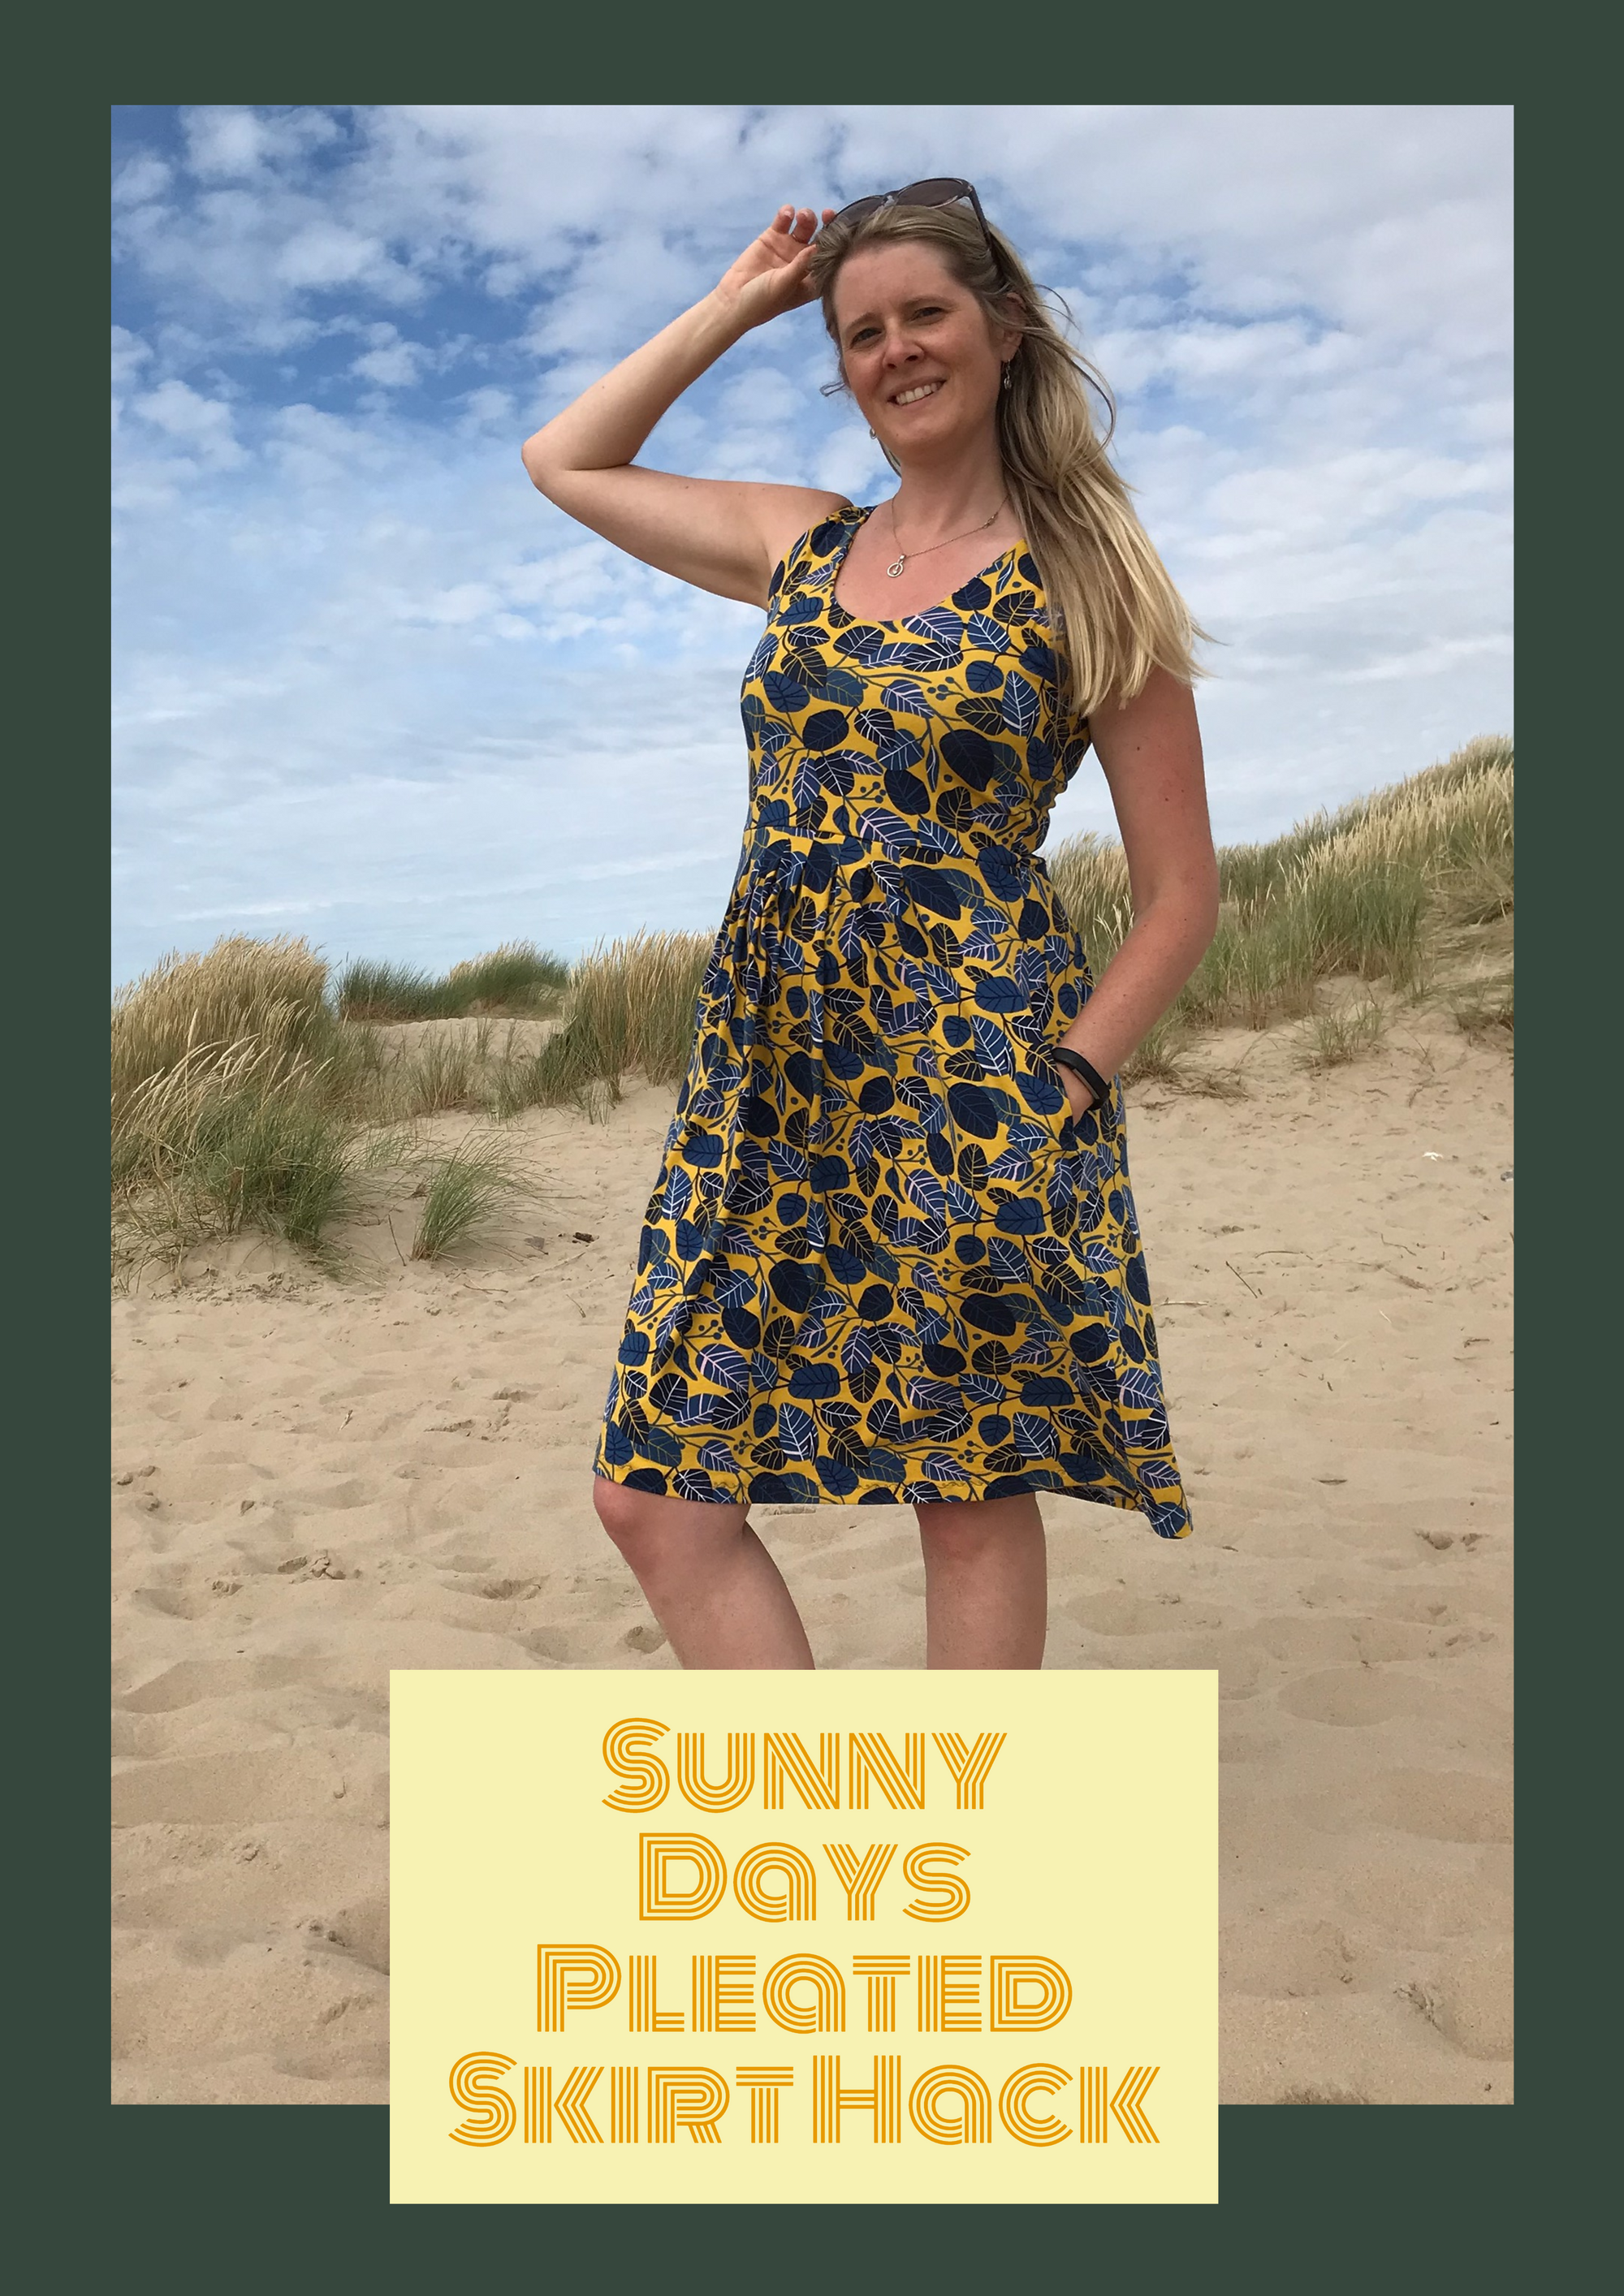 Sunny Days Pleated Skirt Hack